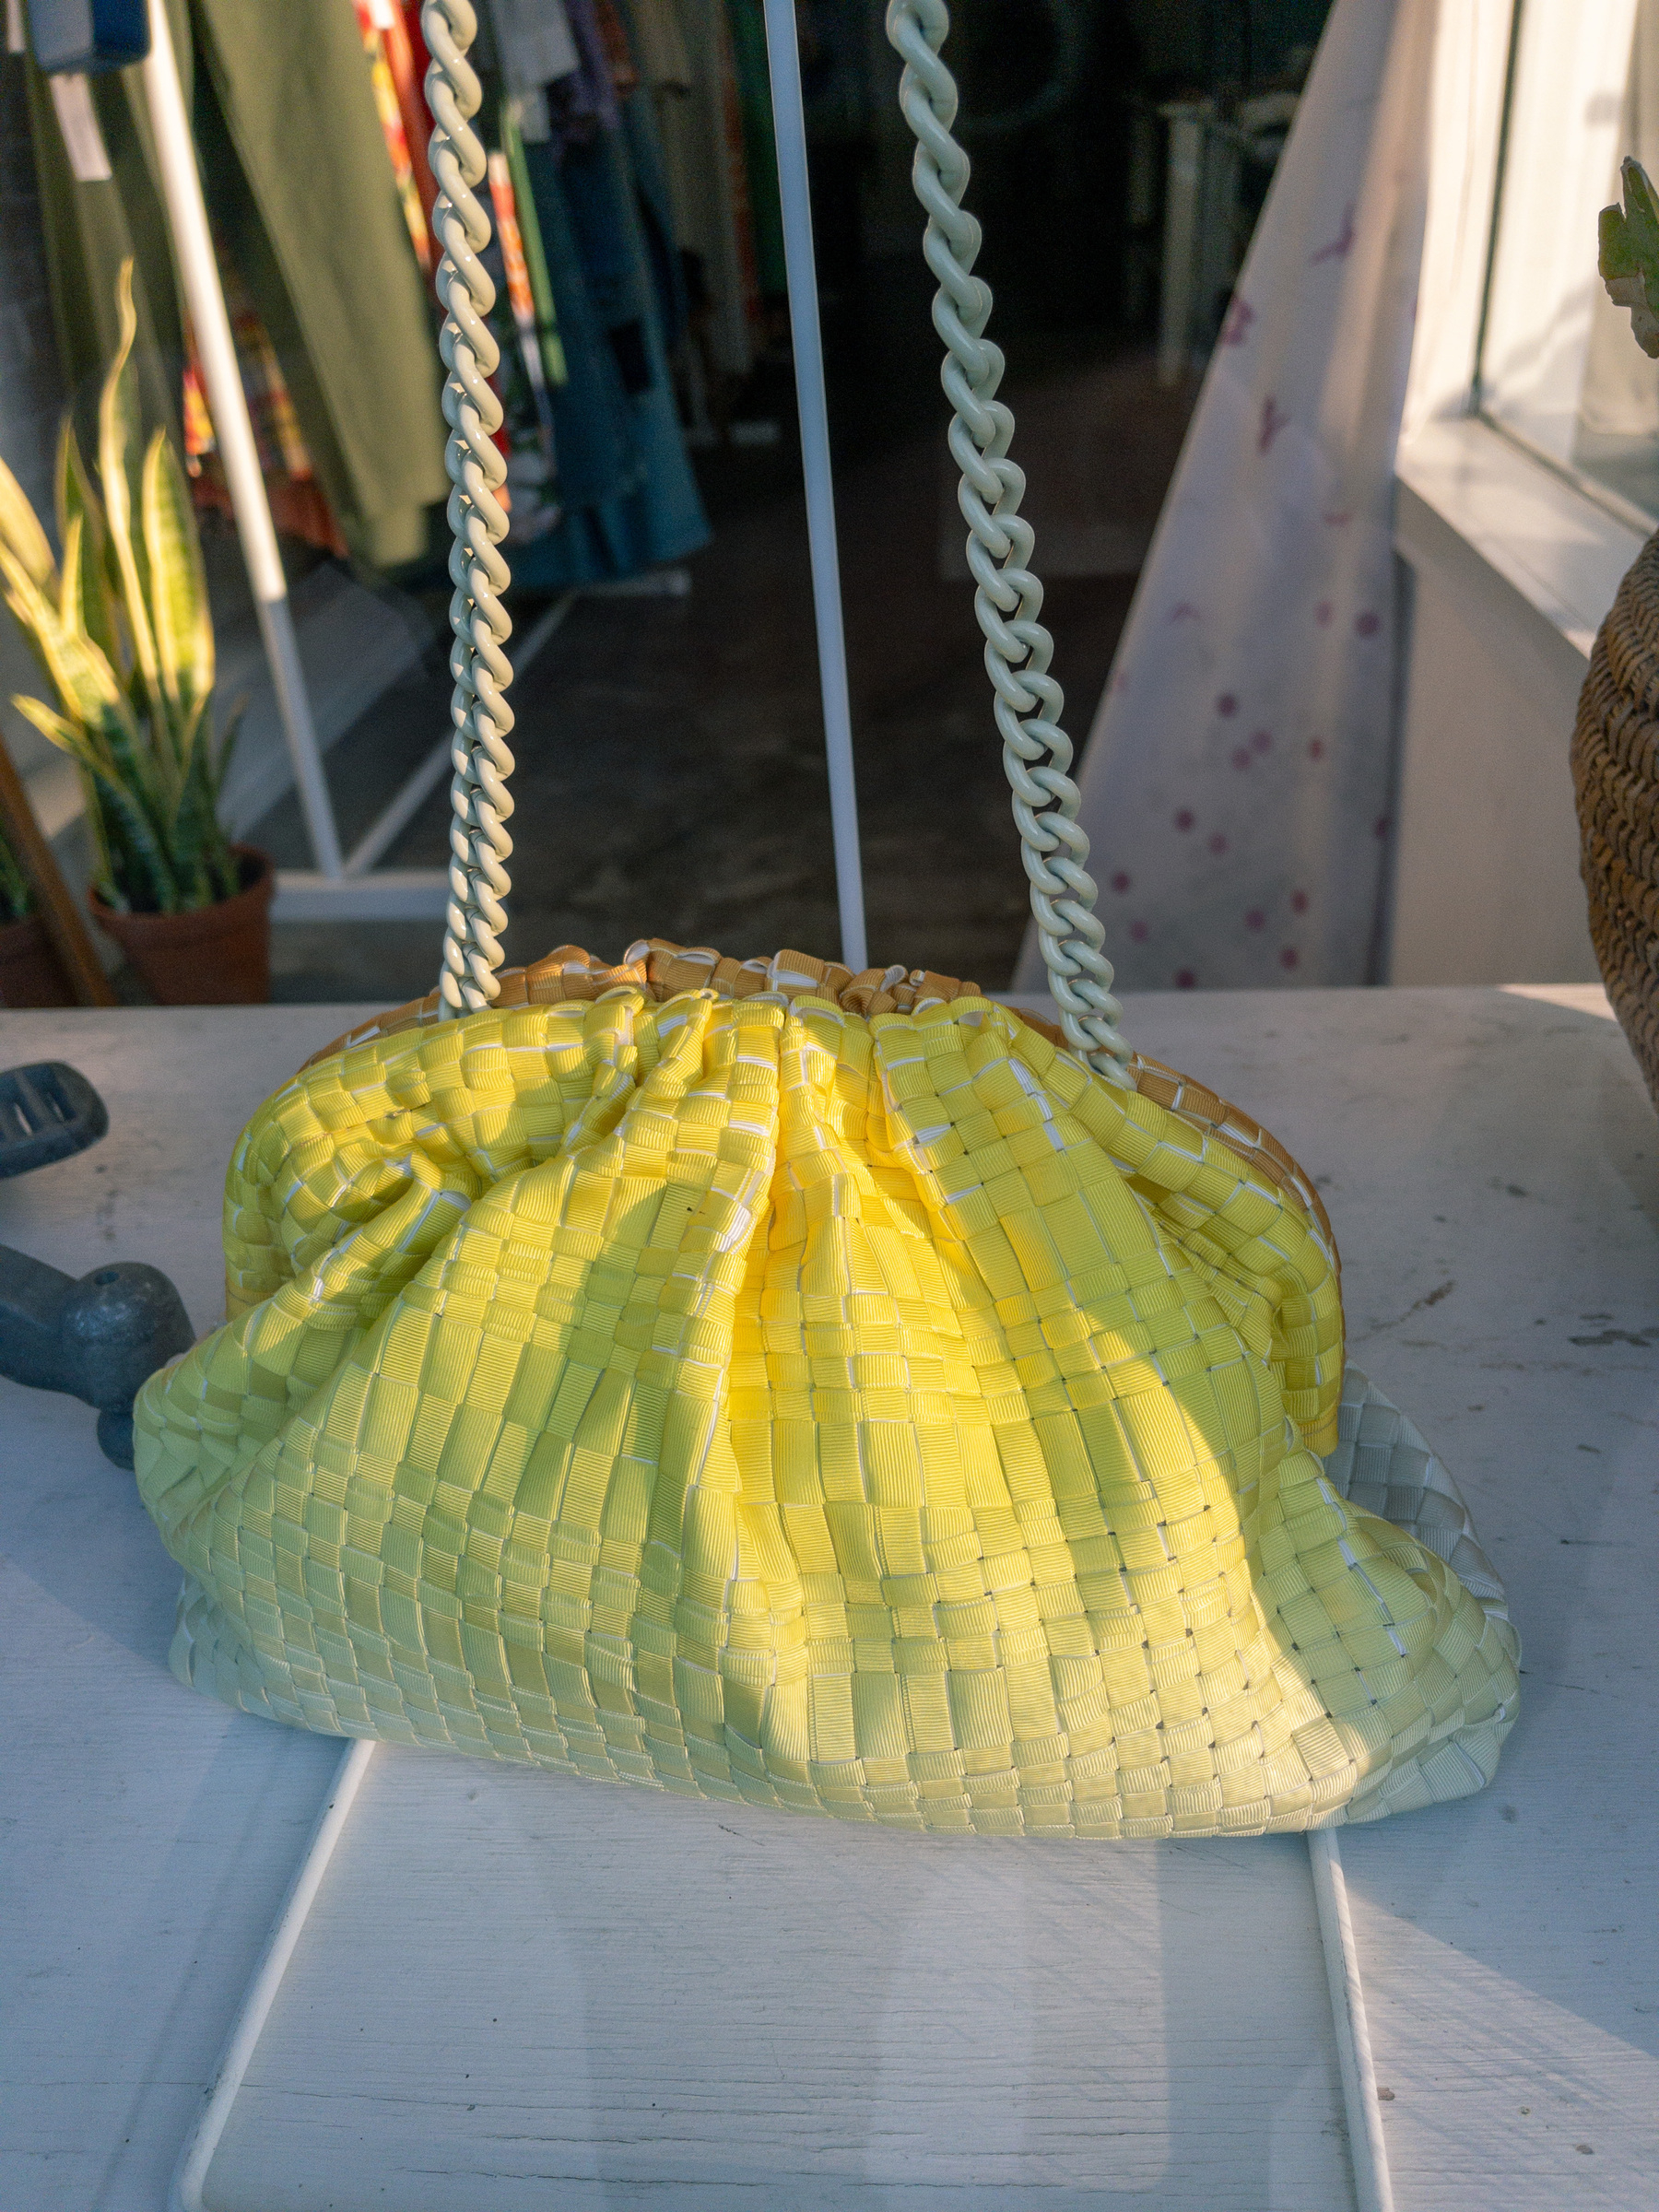 yellow woven. fabric purse in shop window